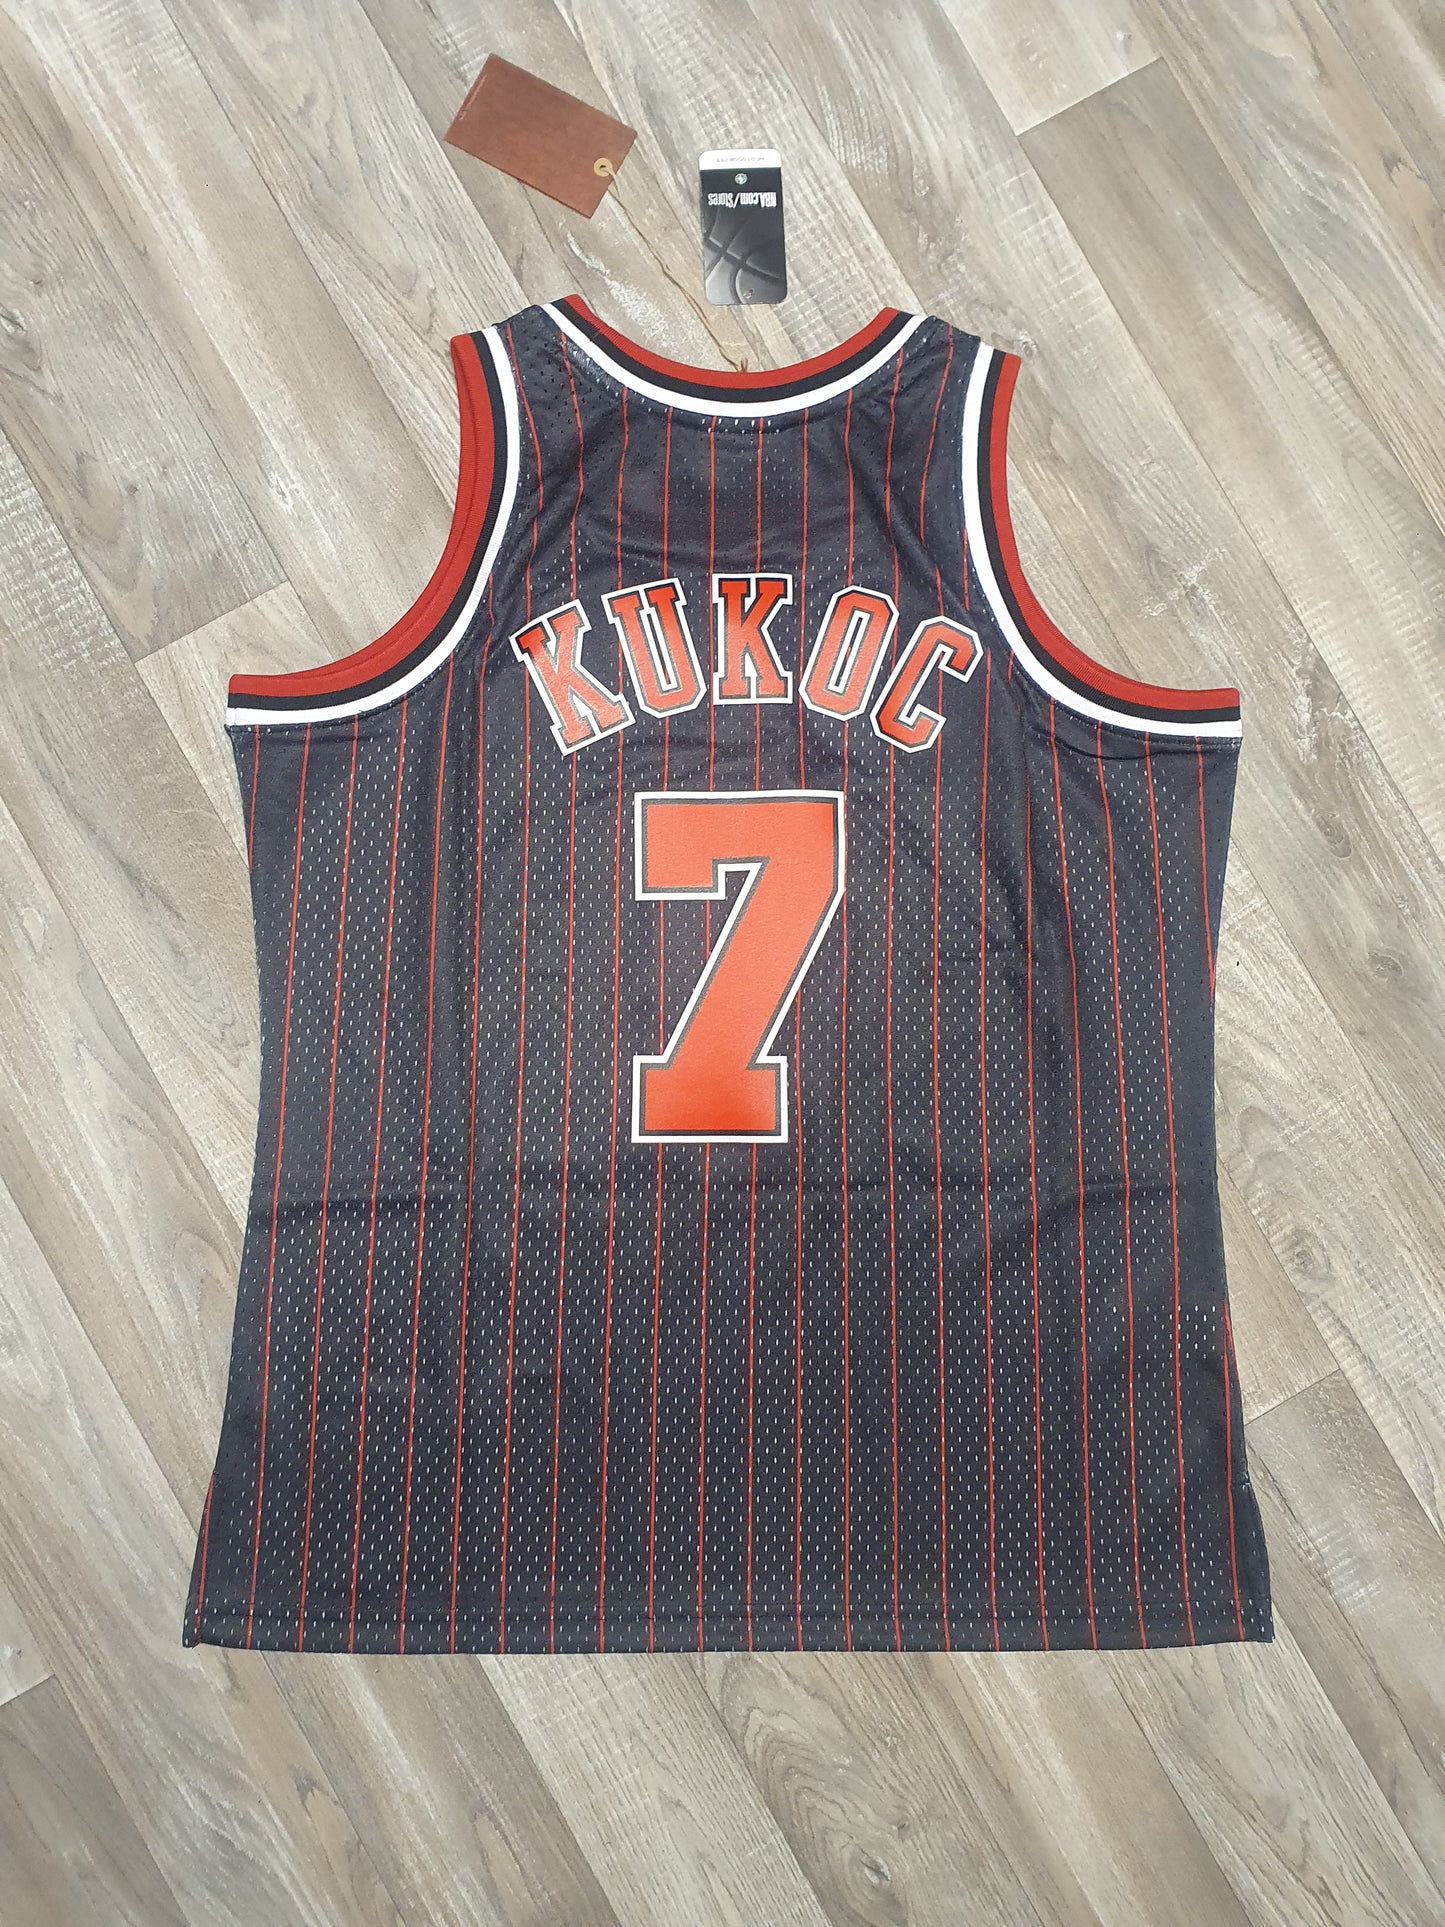 Toni Kukoc Chicago Bulls 1995-96 Alternate Jersey